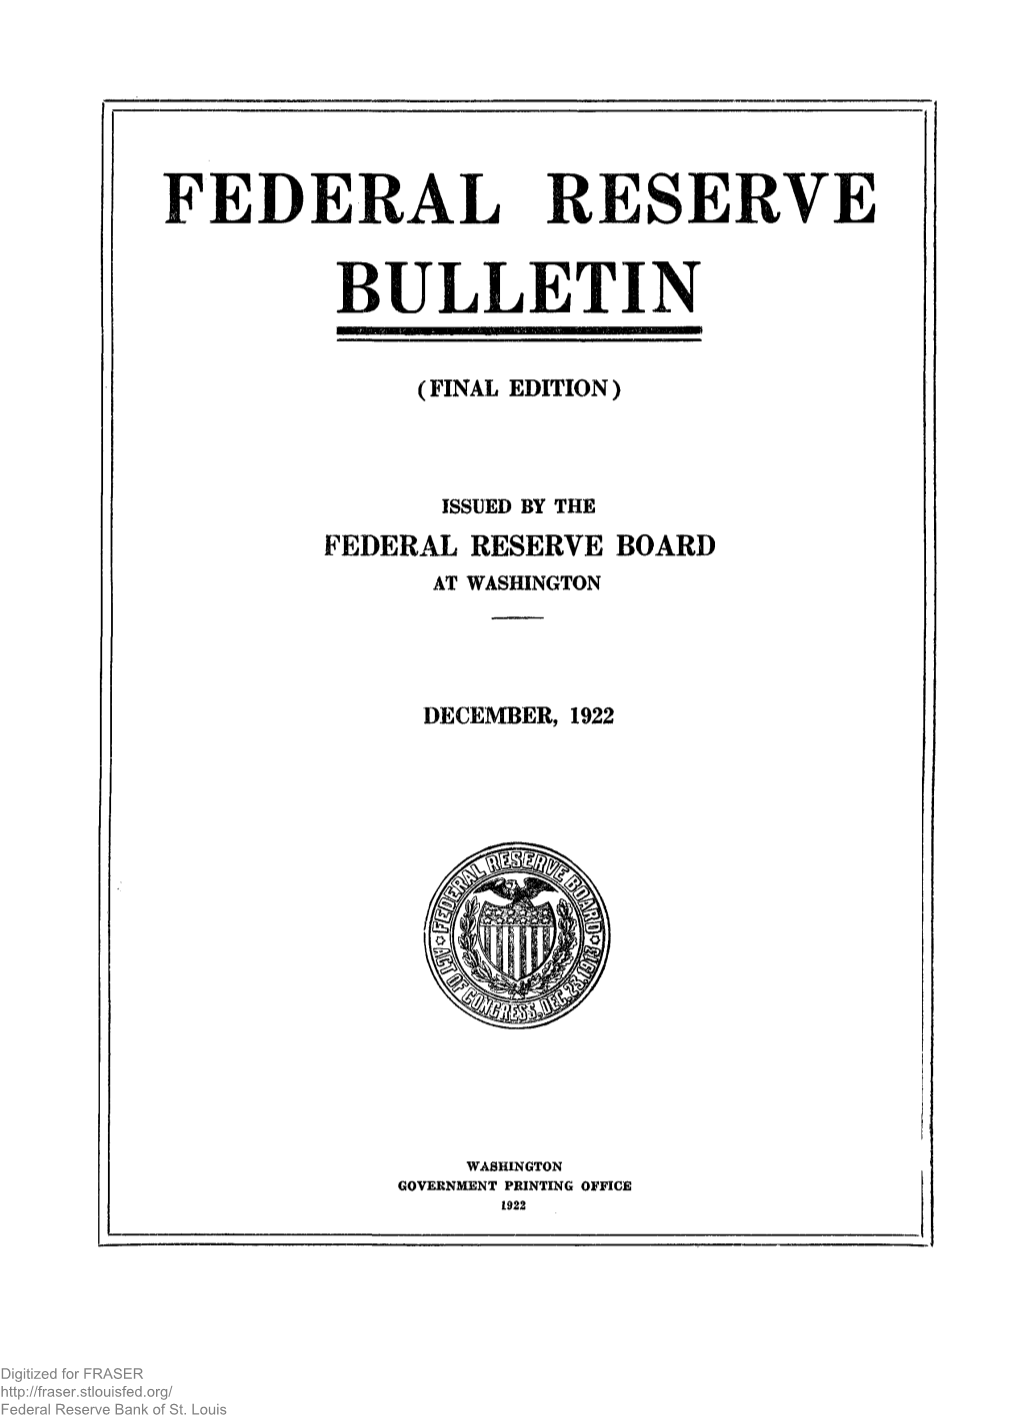 Federal Reserve Bulletin December 1922